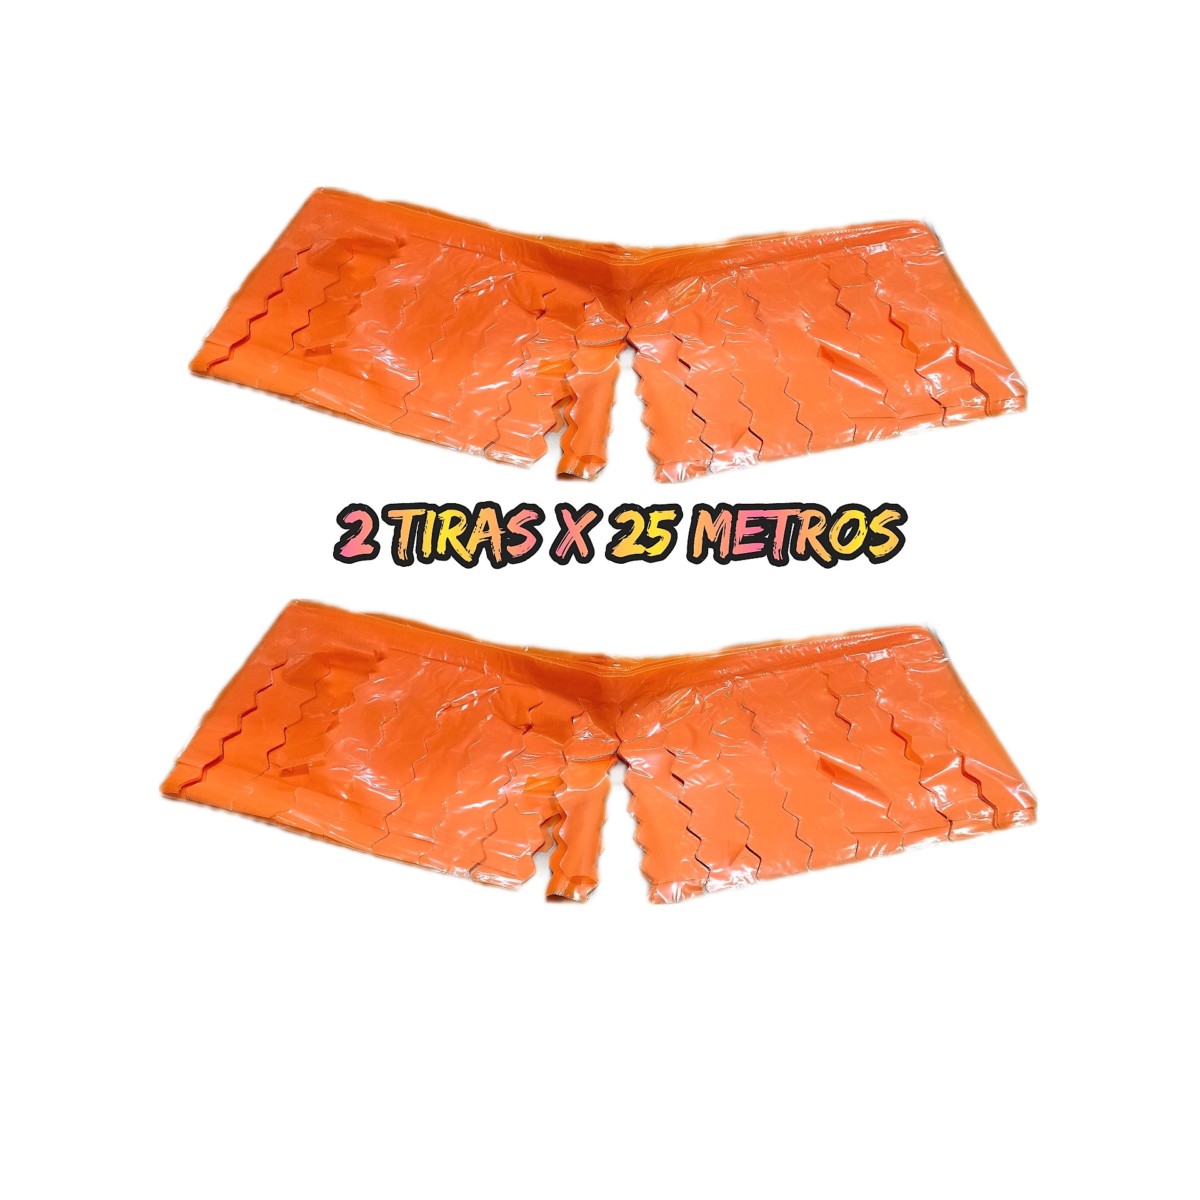 Fleco Plástico Naranja de 25 Metros- Adornos Fiestas- ElcollarhawaianoS.a®-